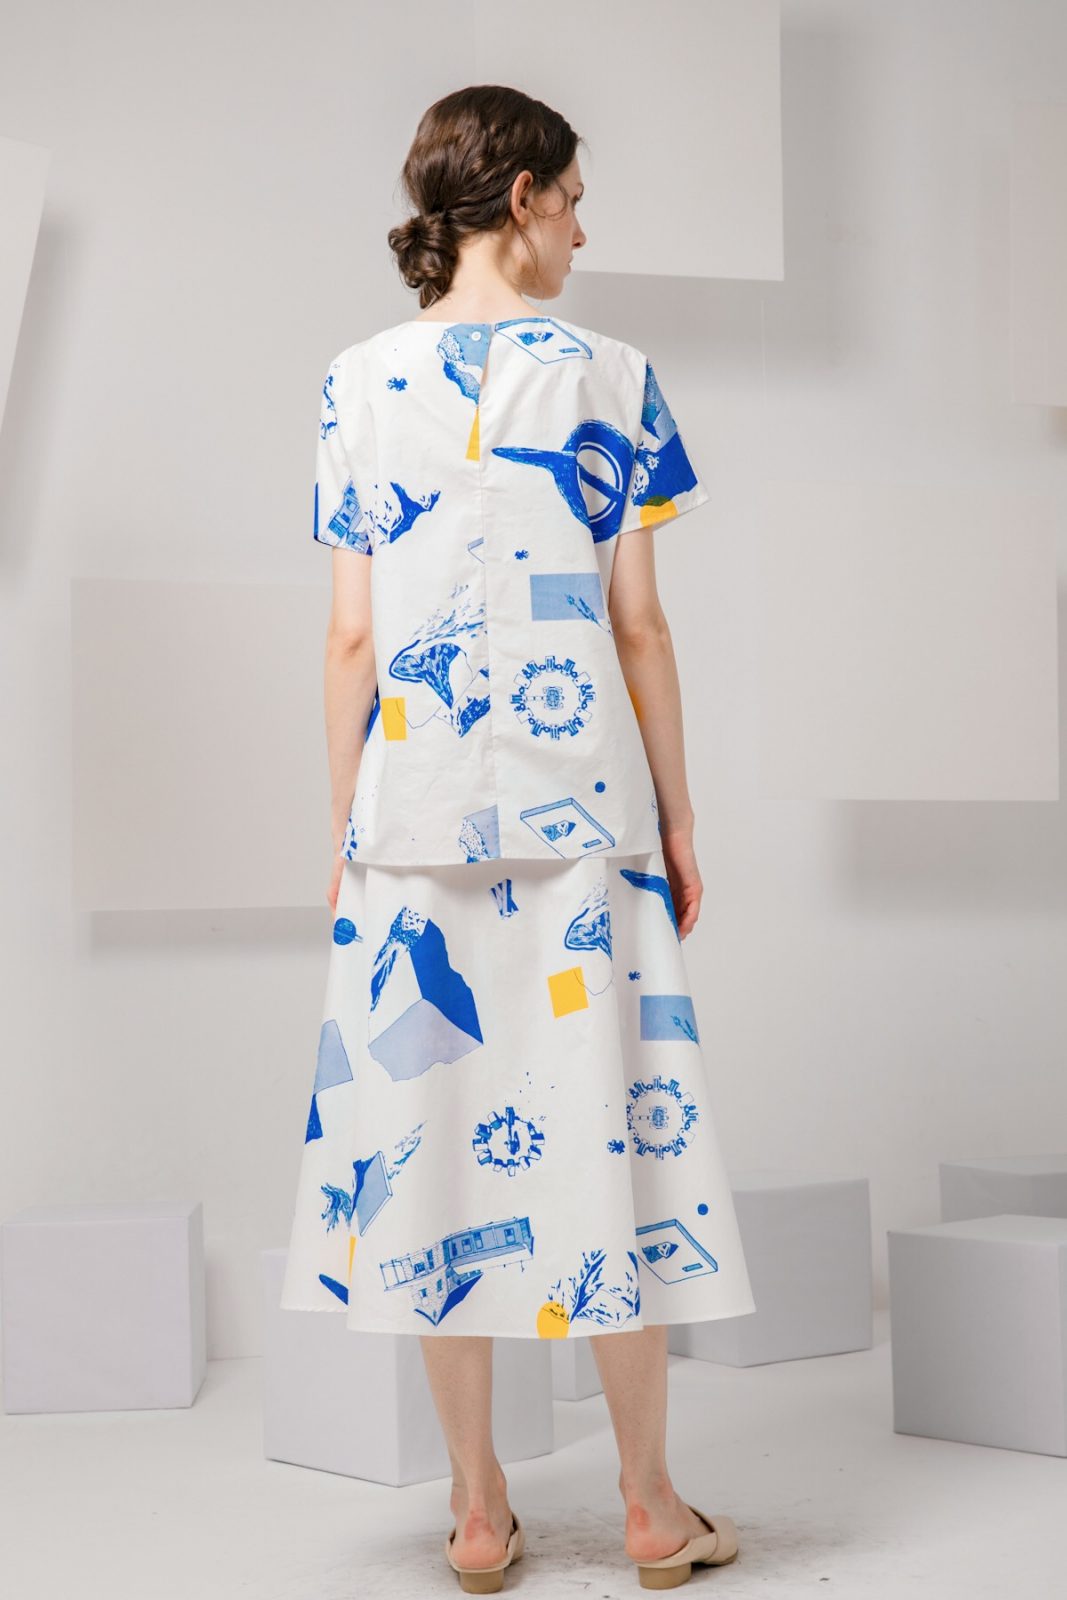 SKYE modern minimalist women clothing fashion Erin Midi Skirt interstellar 2